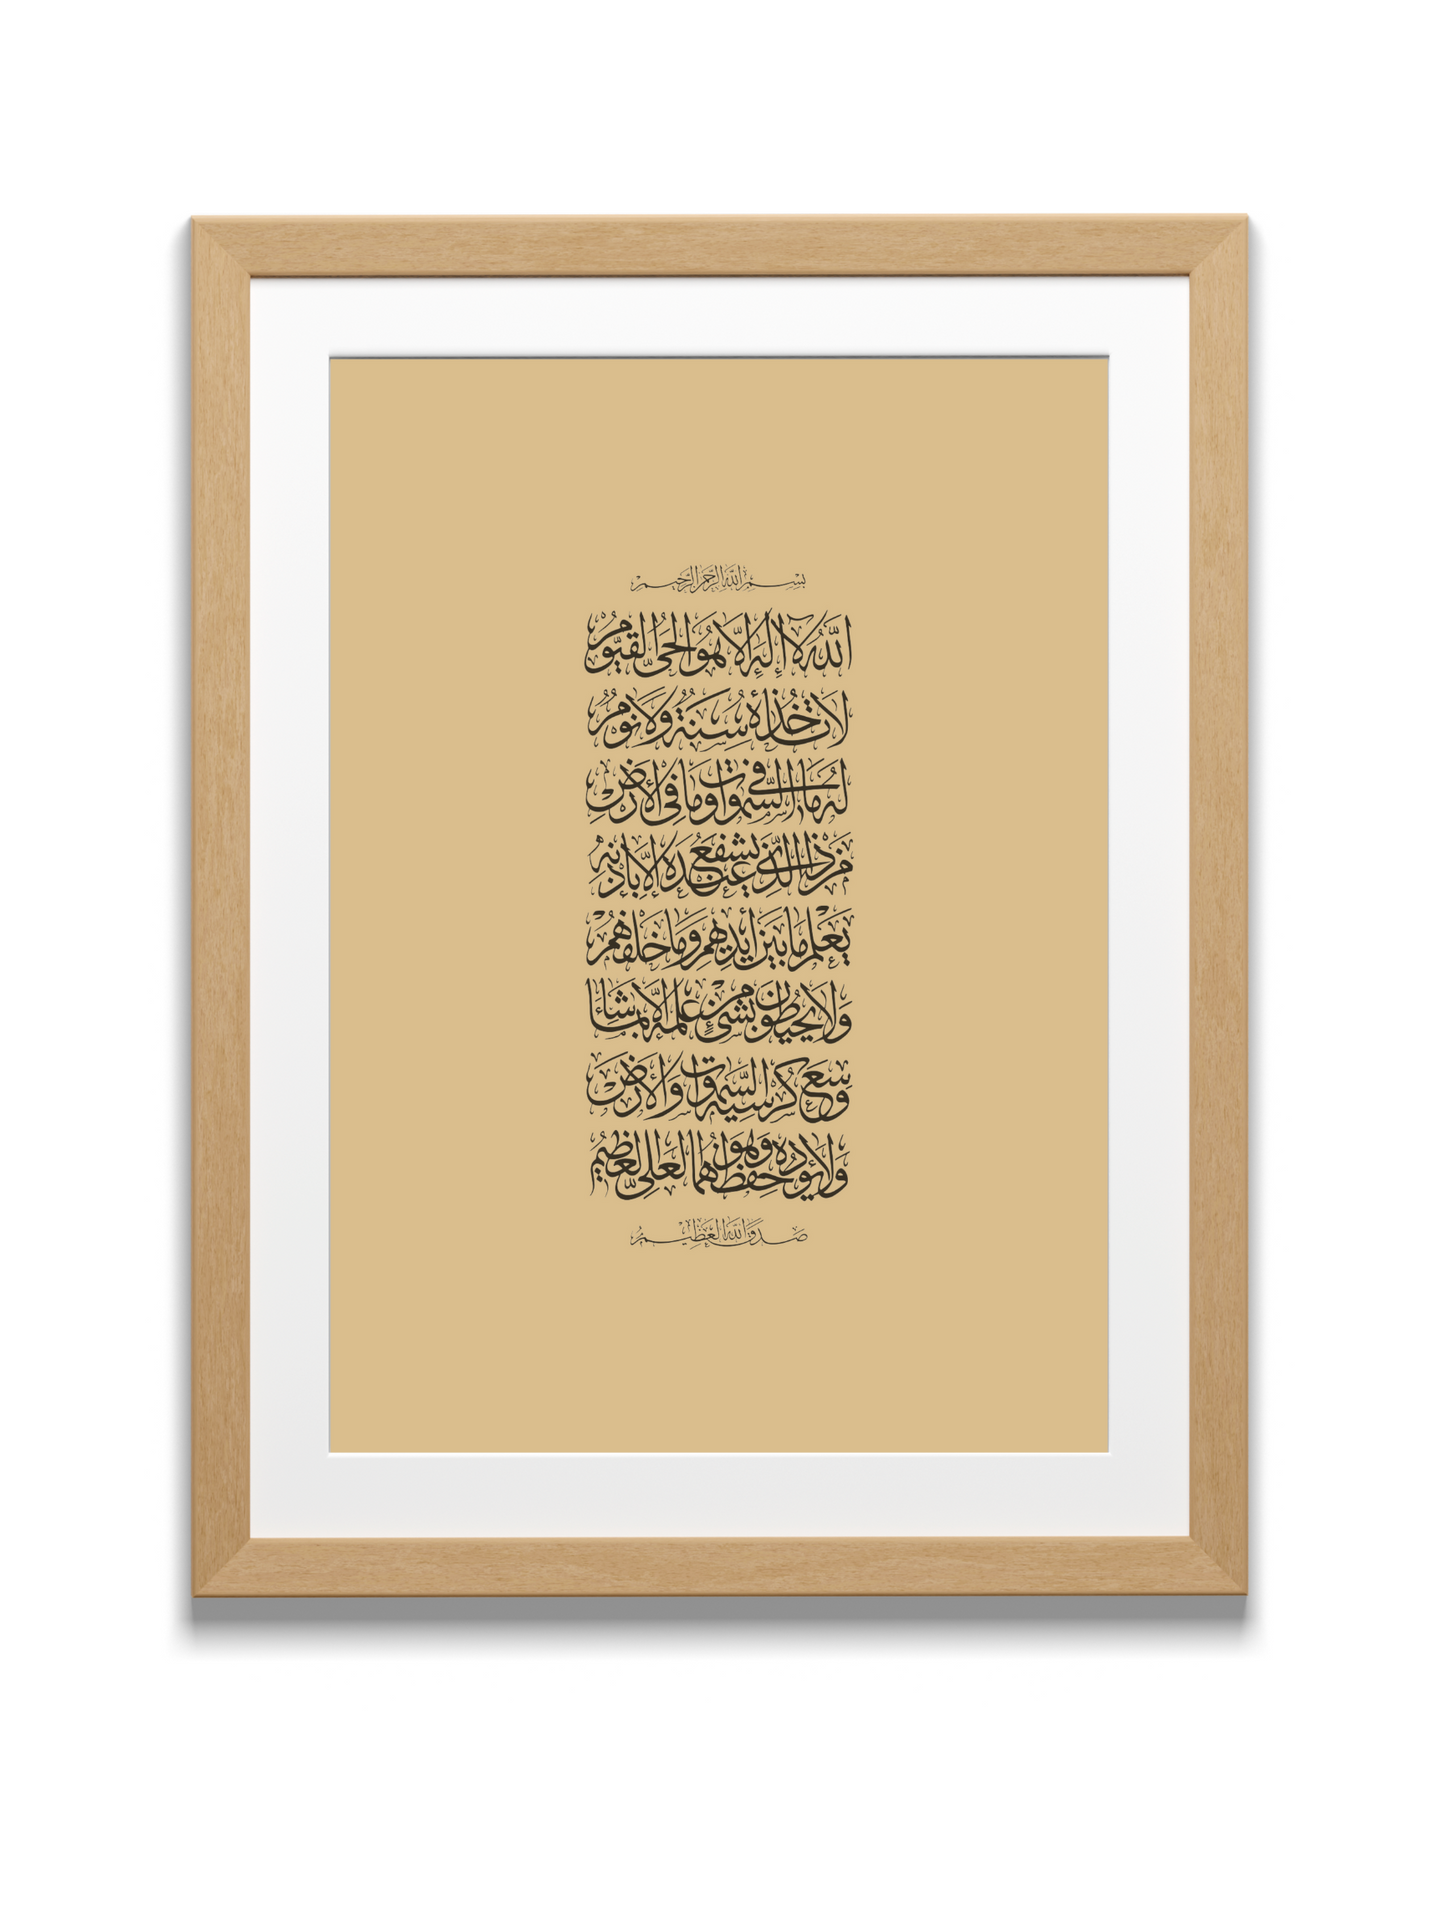 Ayat al kursi | 2:246 Quran | Naskh Arabic Calligraphy Style | Beige